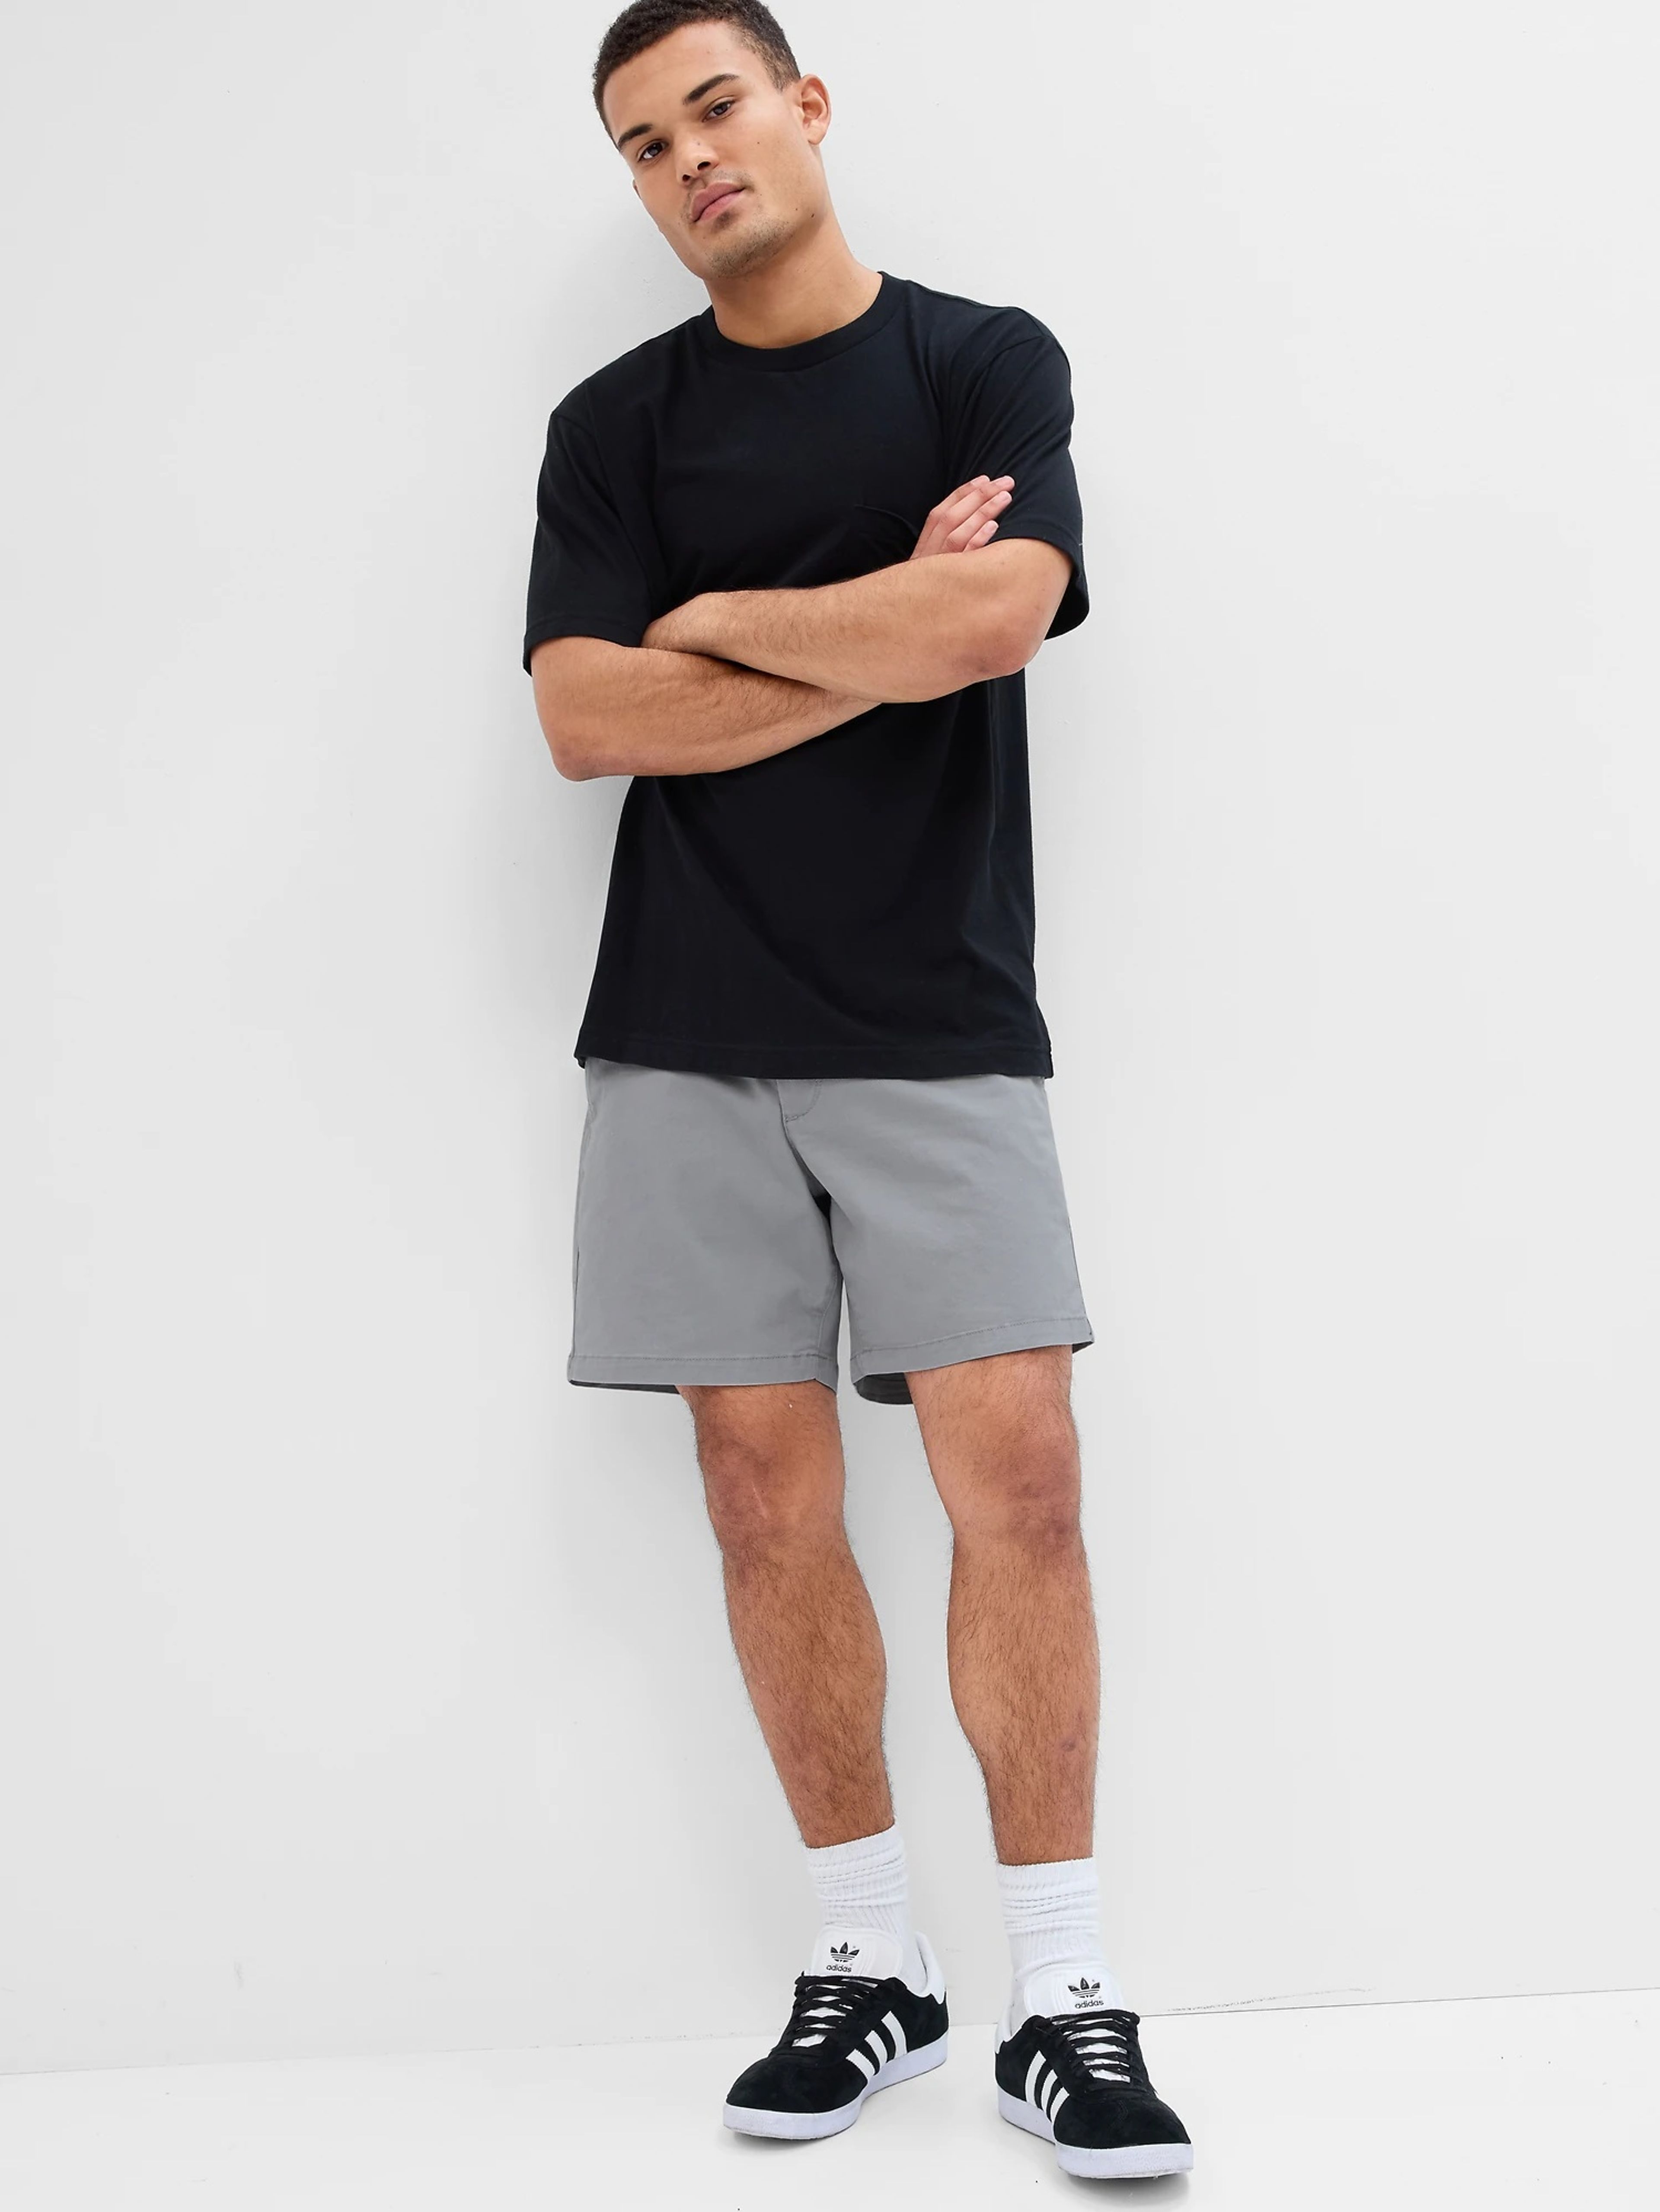 Shorts essential khaki